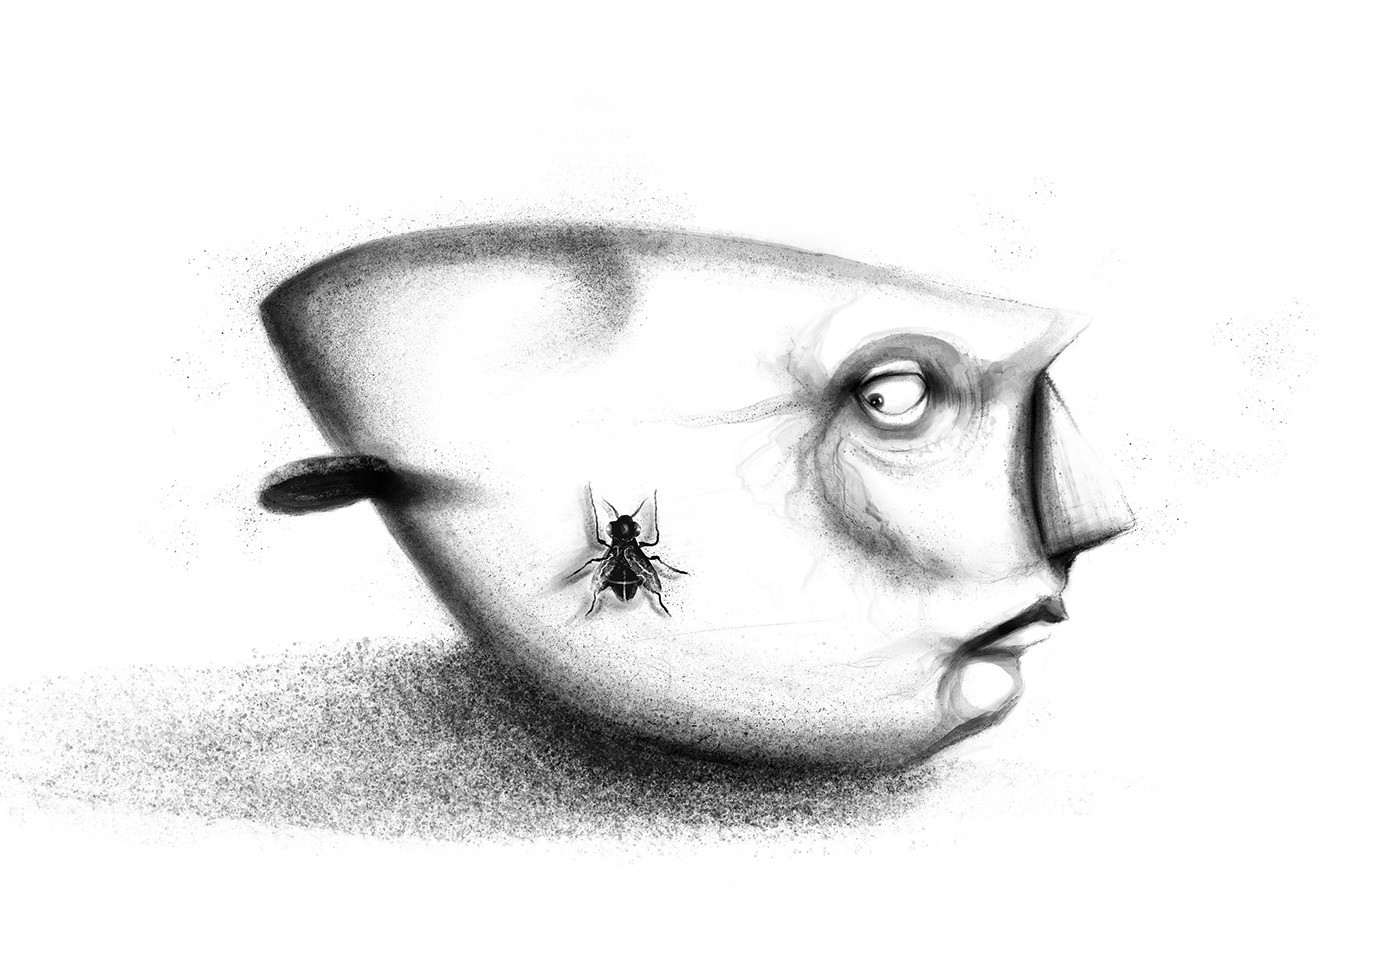 organic heads gray black Fly concerns coal new Illustrator deformation